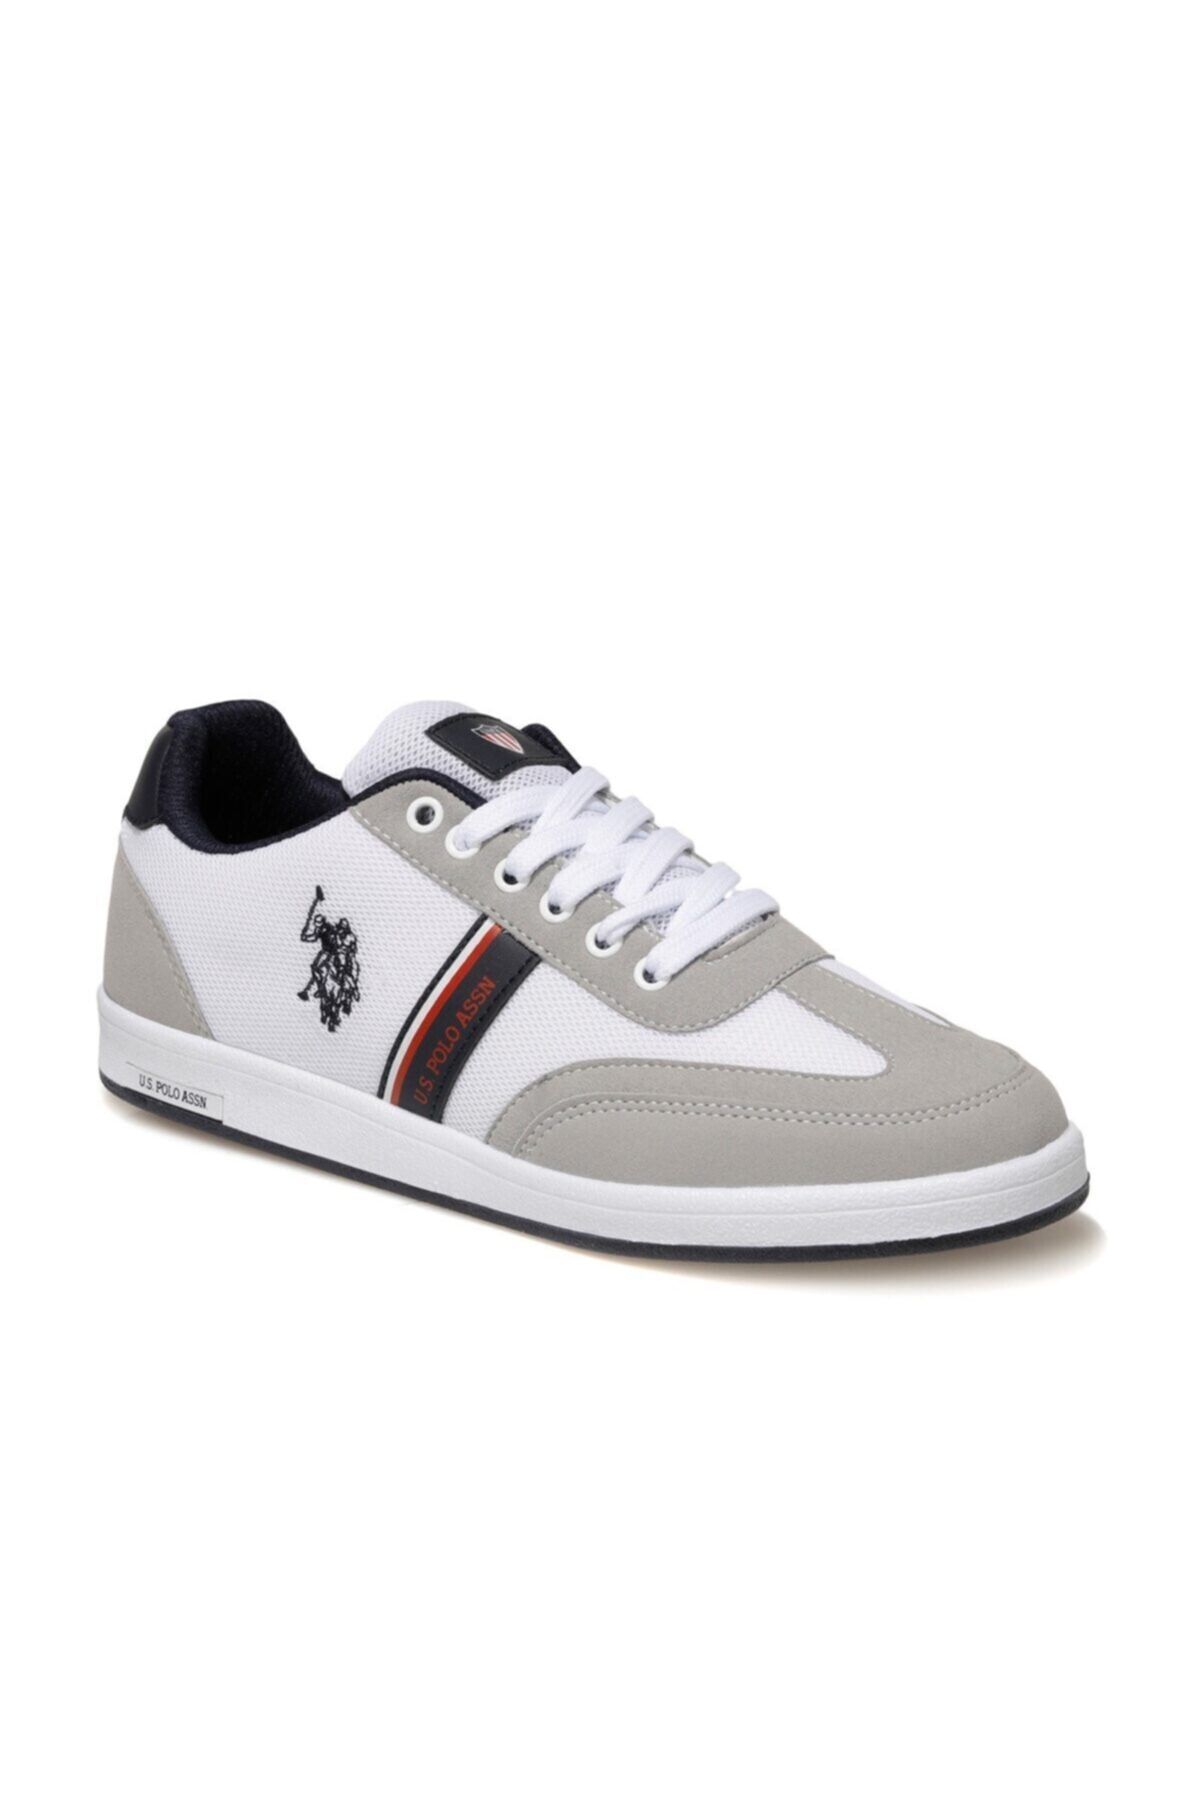 U.S. Polo Assn. KARES 1FX Beyaz Erkek Sneaker Ayakkabı 100910452